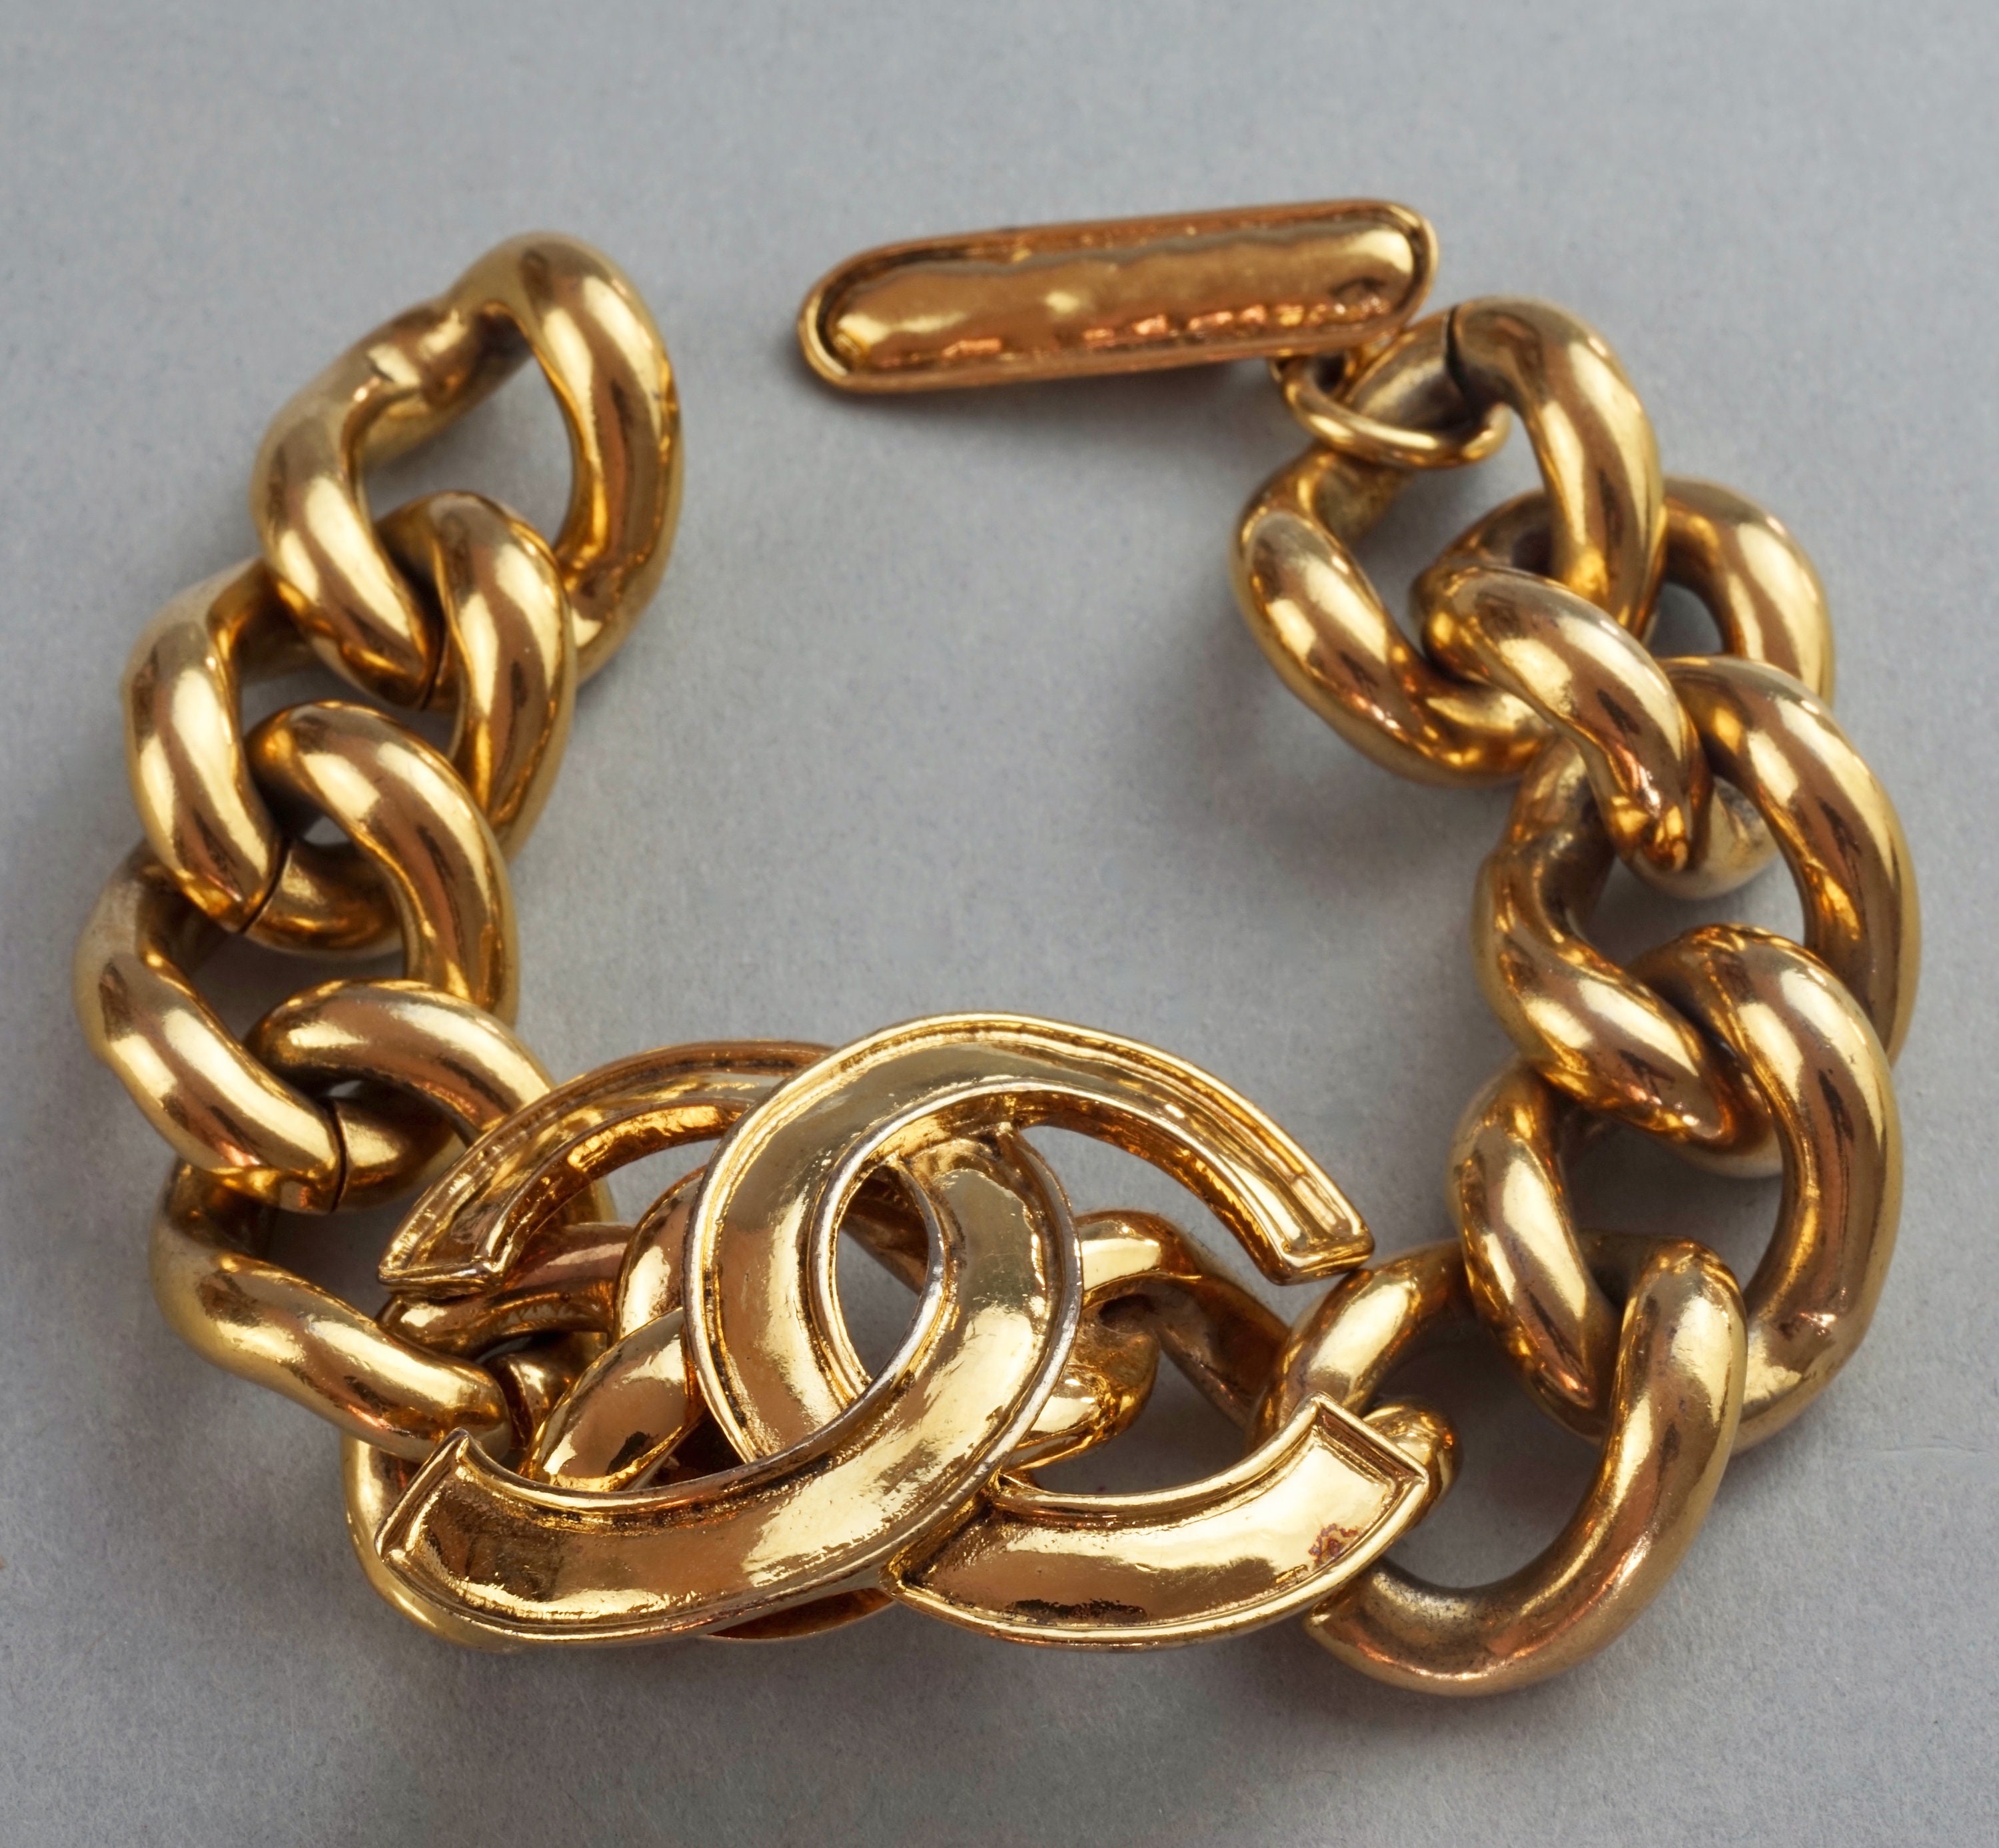 Aggregate 77+ chanel chain bracelet best